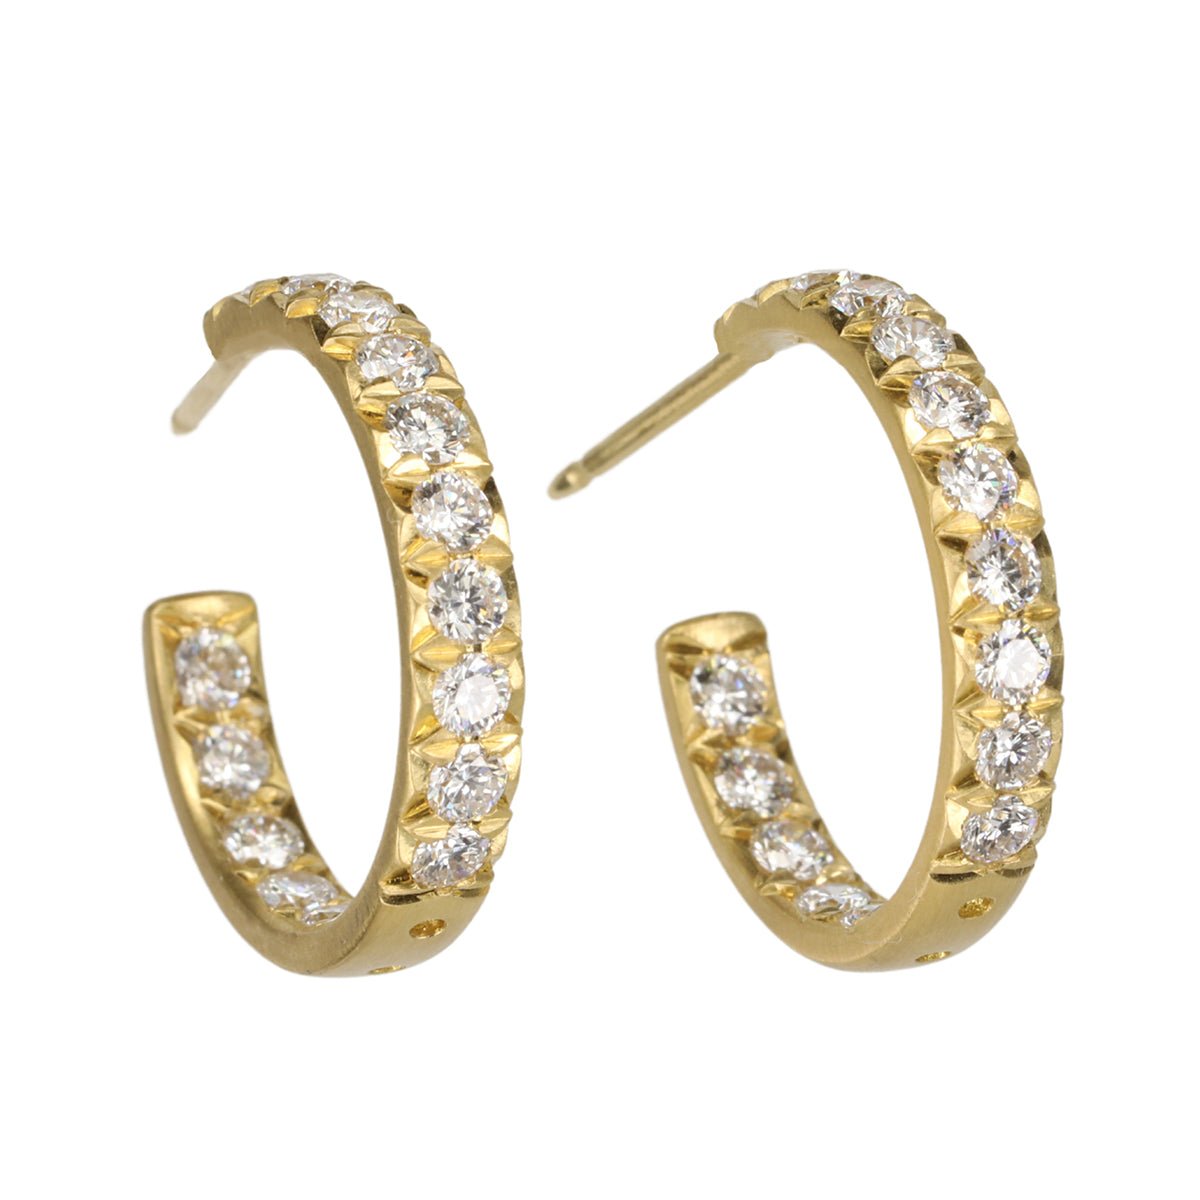 Caroline Ellen Small Gold and Pave Diamond Hoop Earrings – Peridot